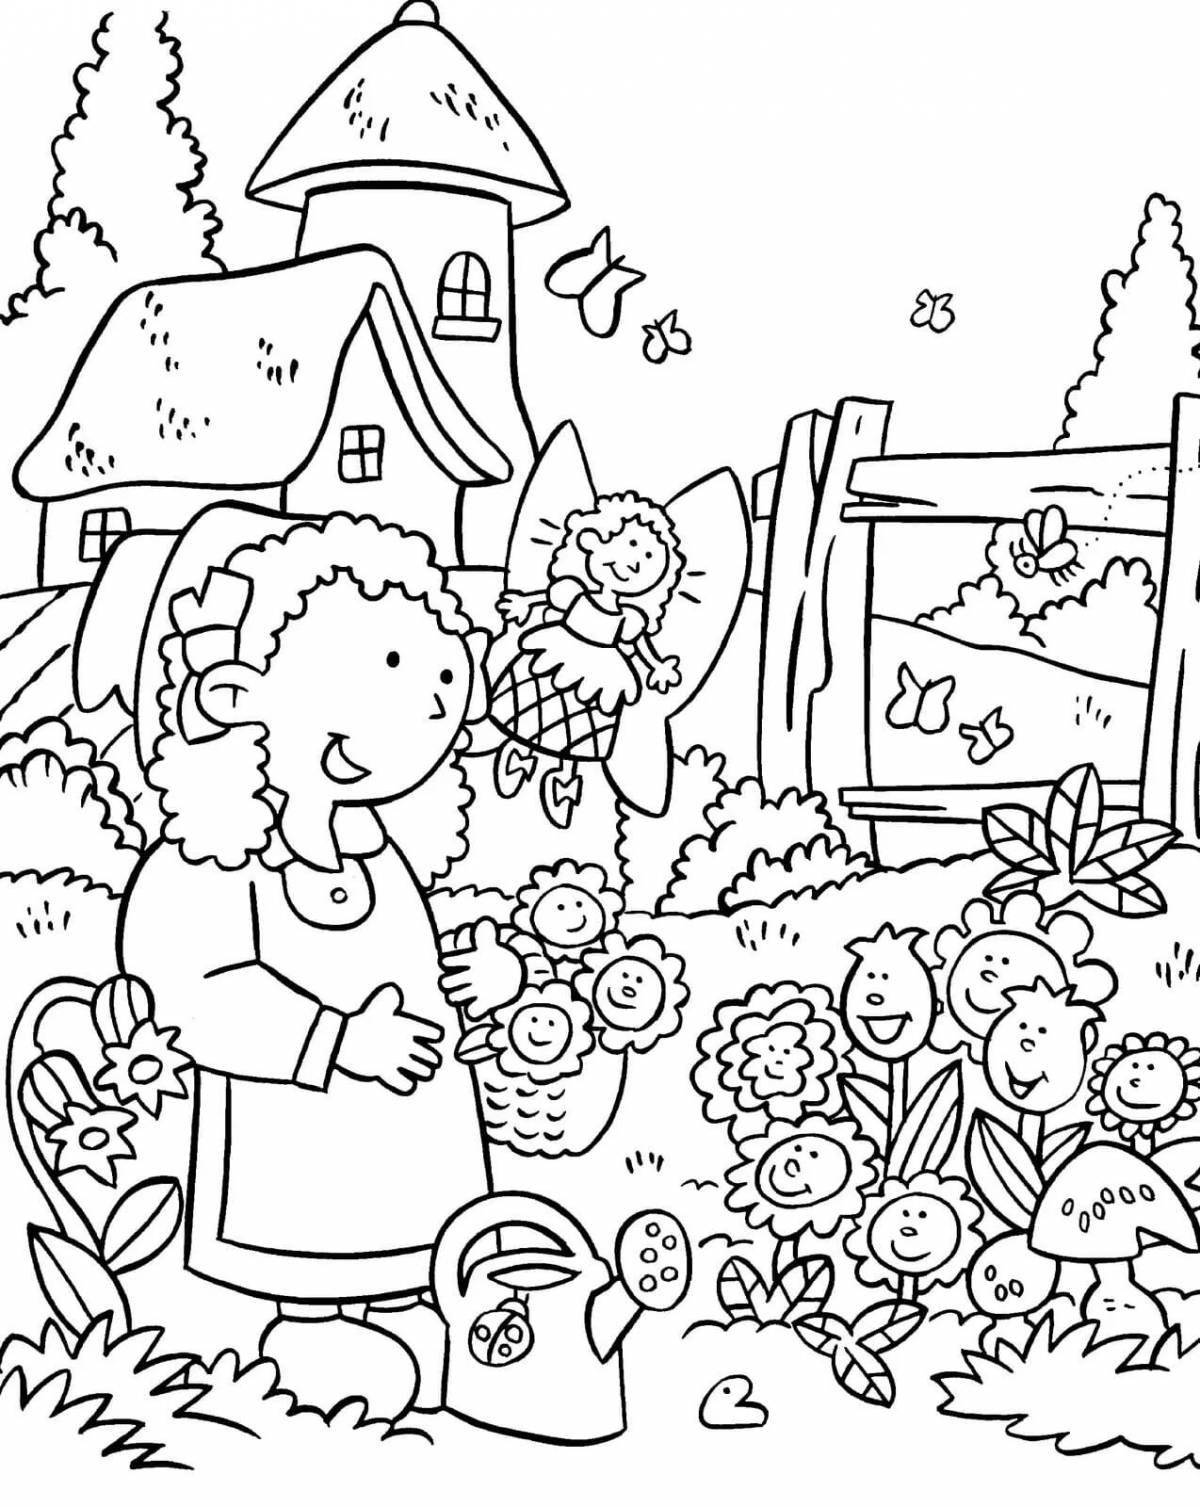 Раскраска радостный сад для детей